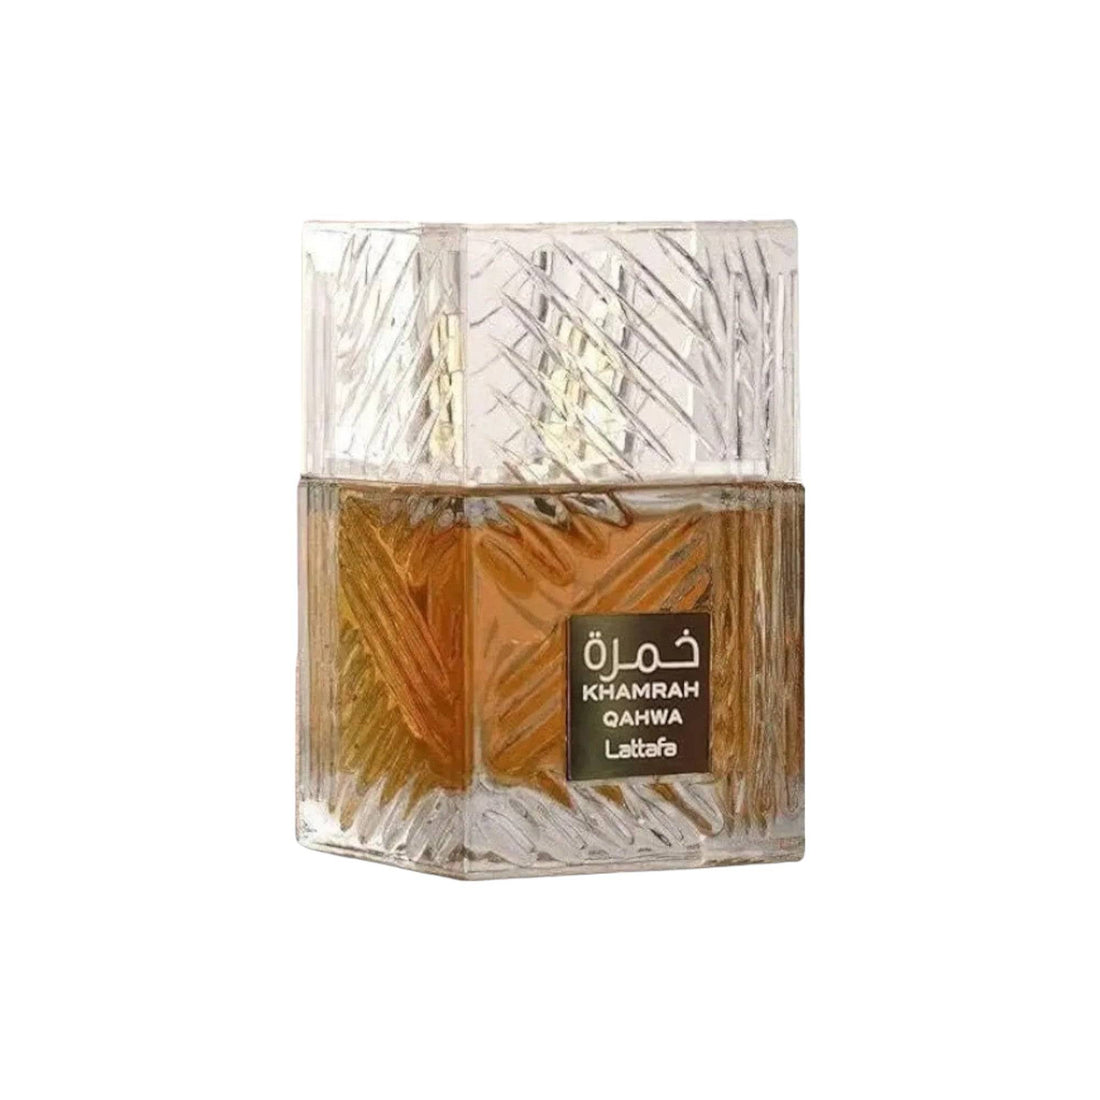 Elegant bottle of Khamrah Qahwa perfume, embodying the aroma of Arabic coffee.